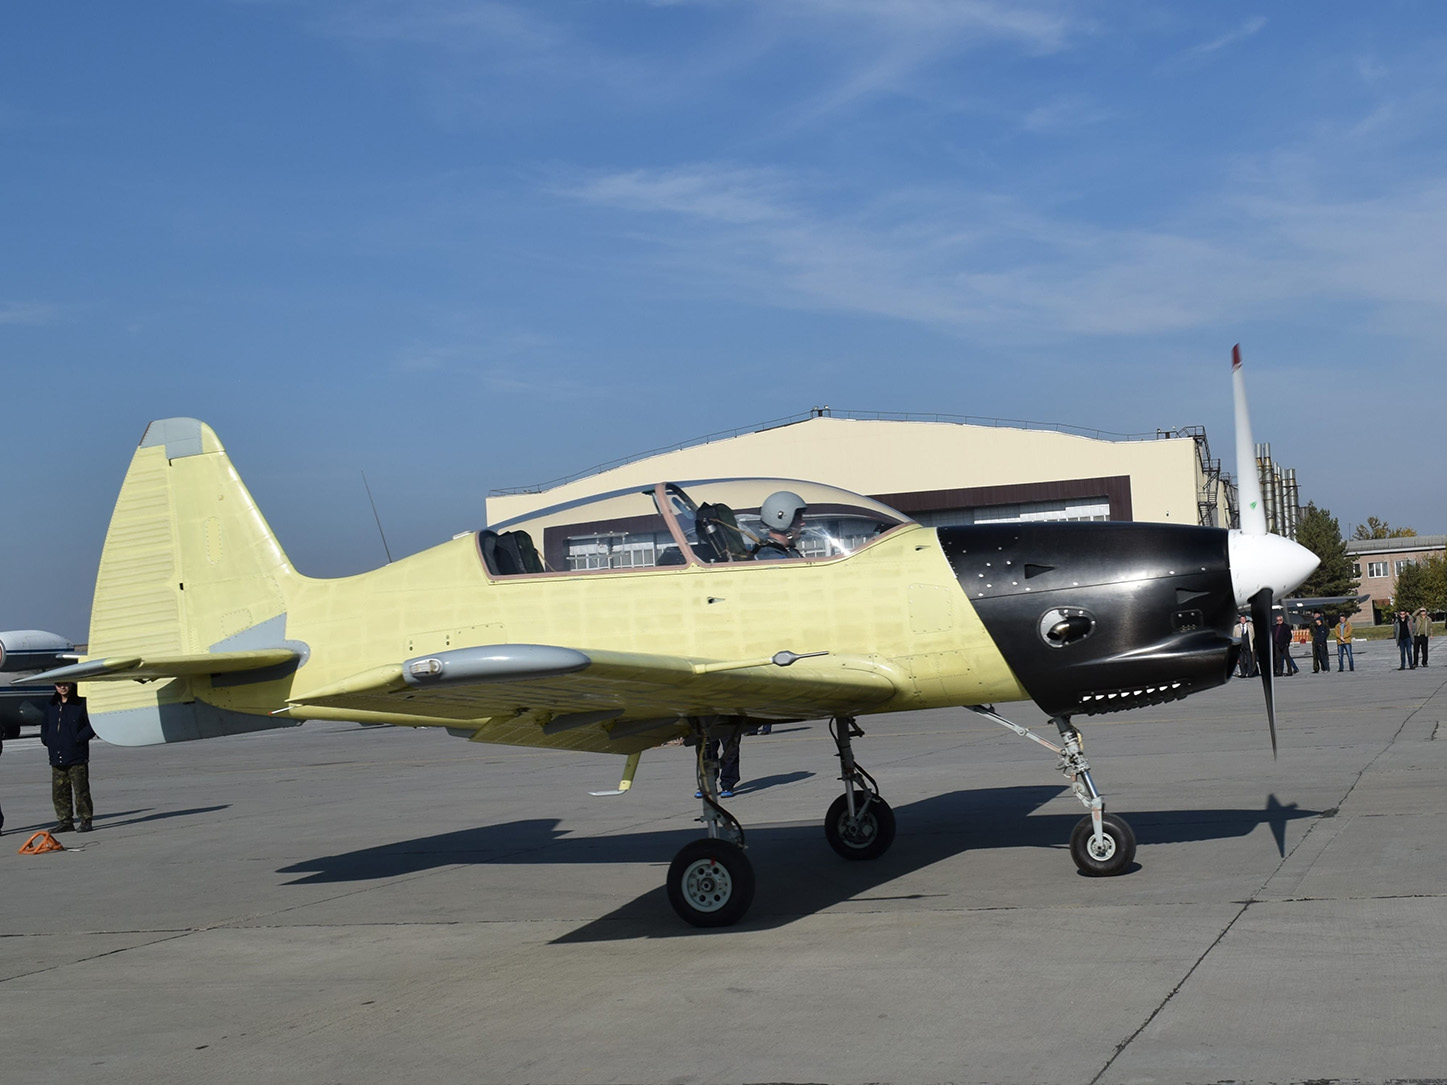 Yak-152 training aircraft has performed its maiden flight